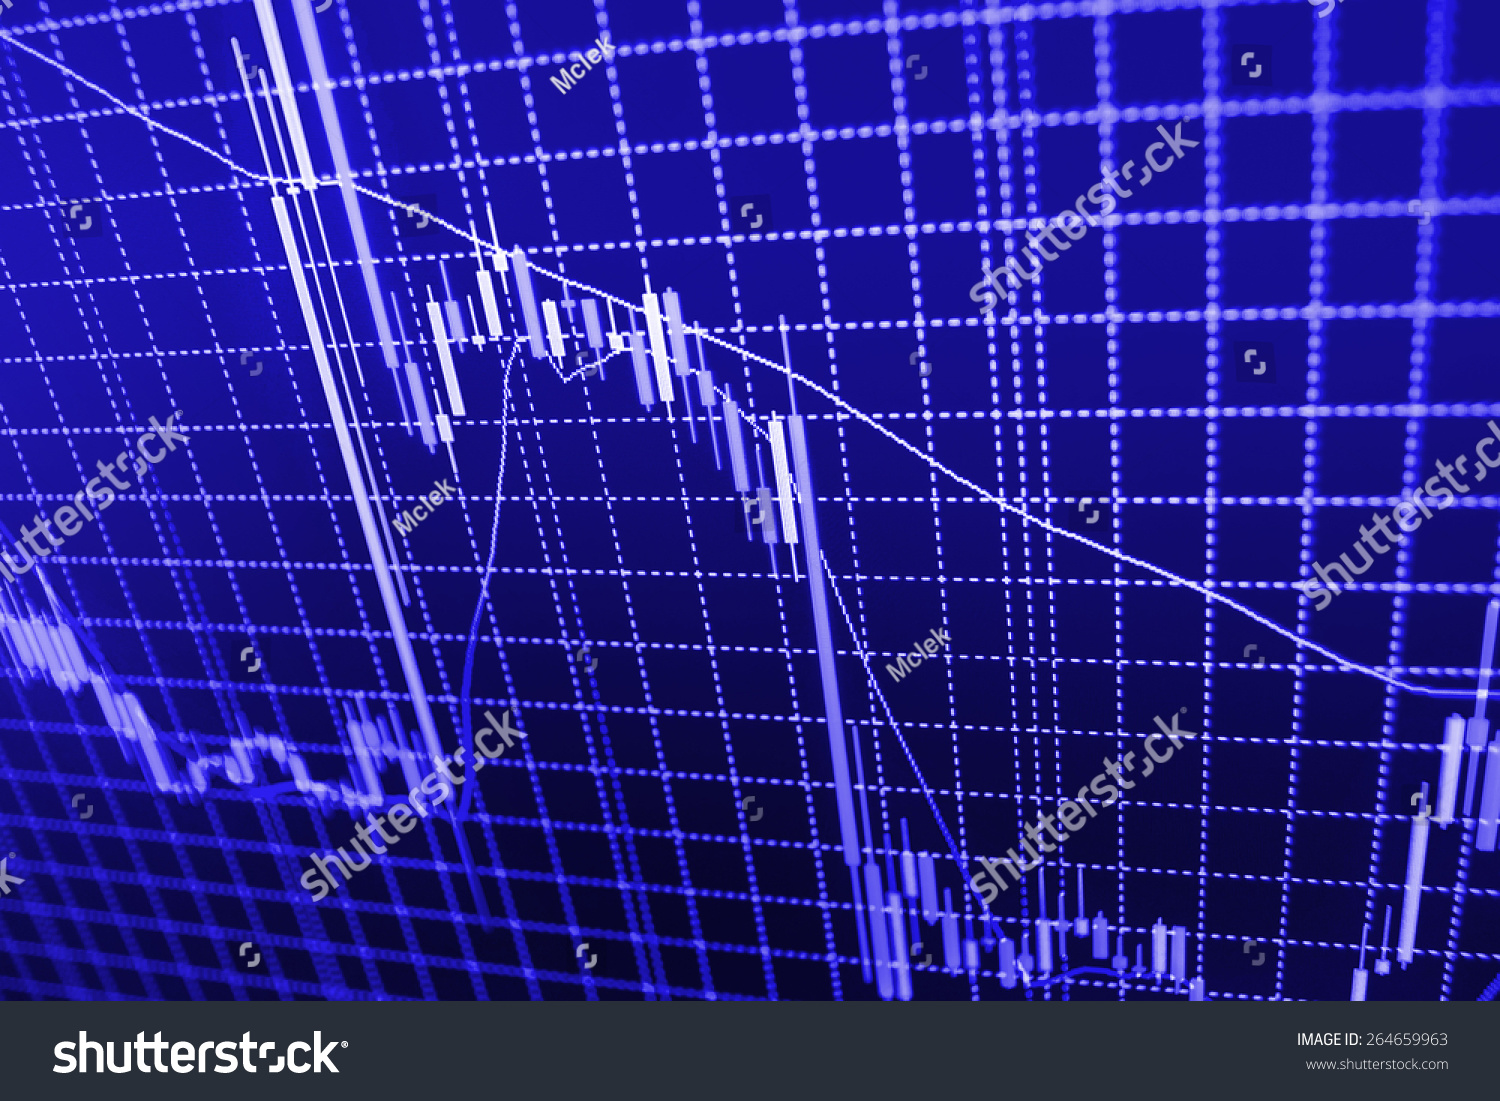 Share Market Stock Chart